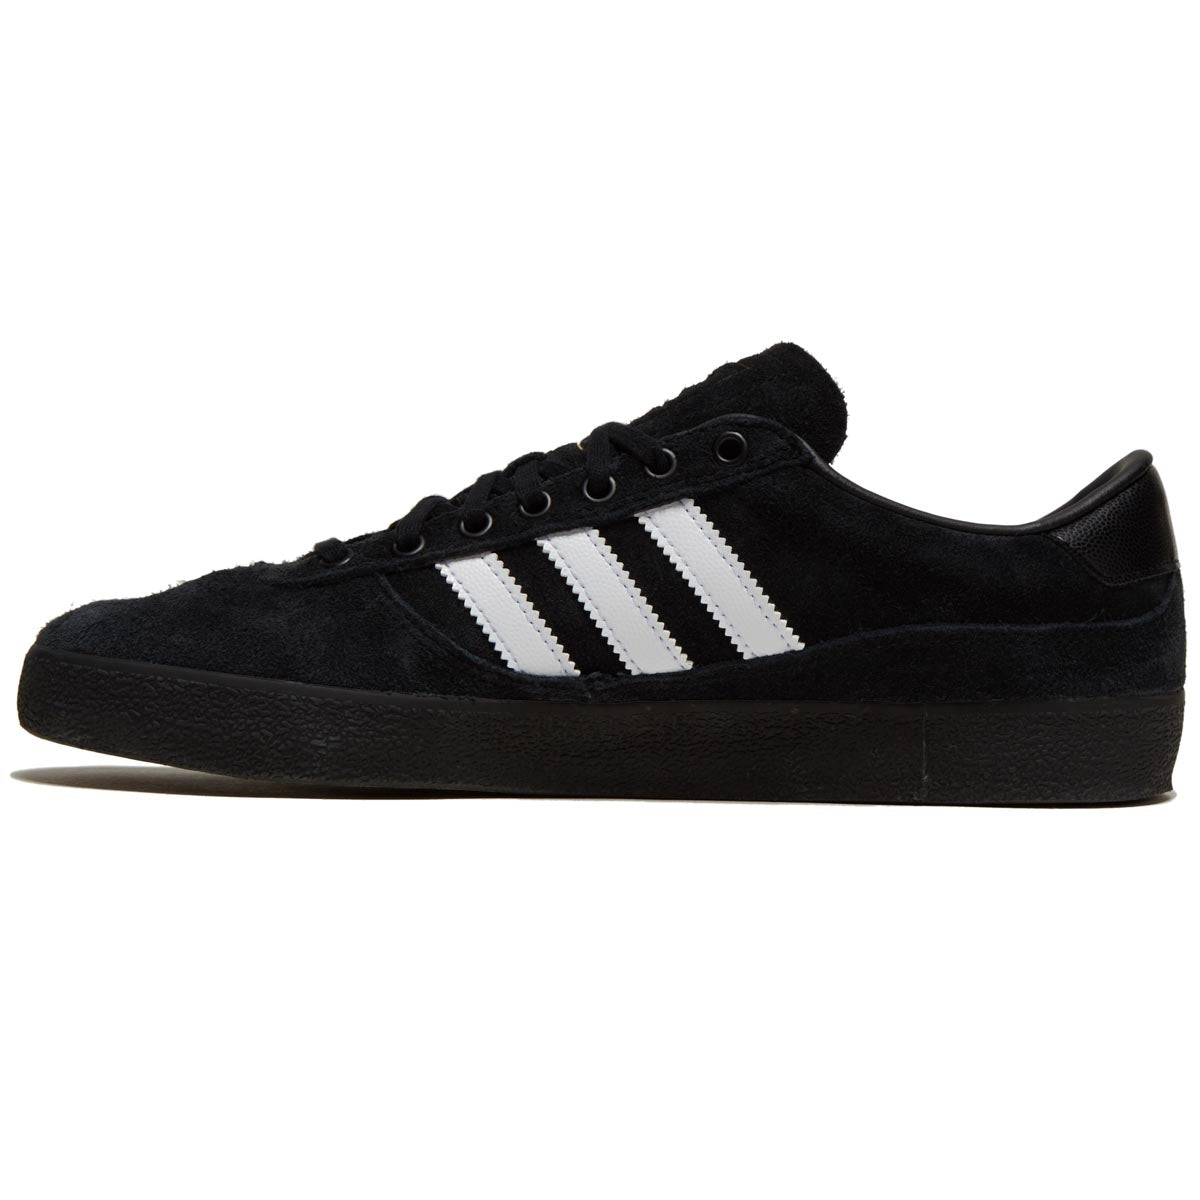 Adidas Puig Indoor Shoes - Black/White/Black image 2